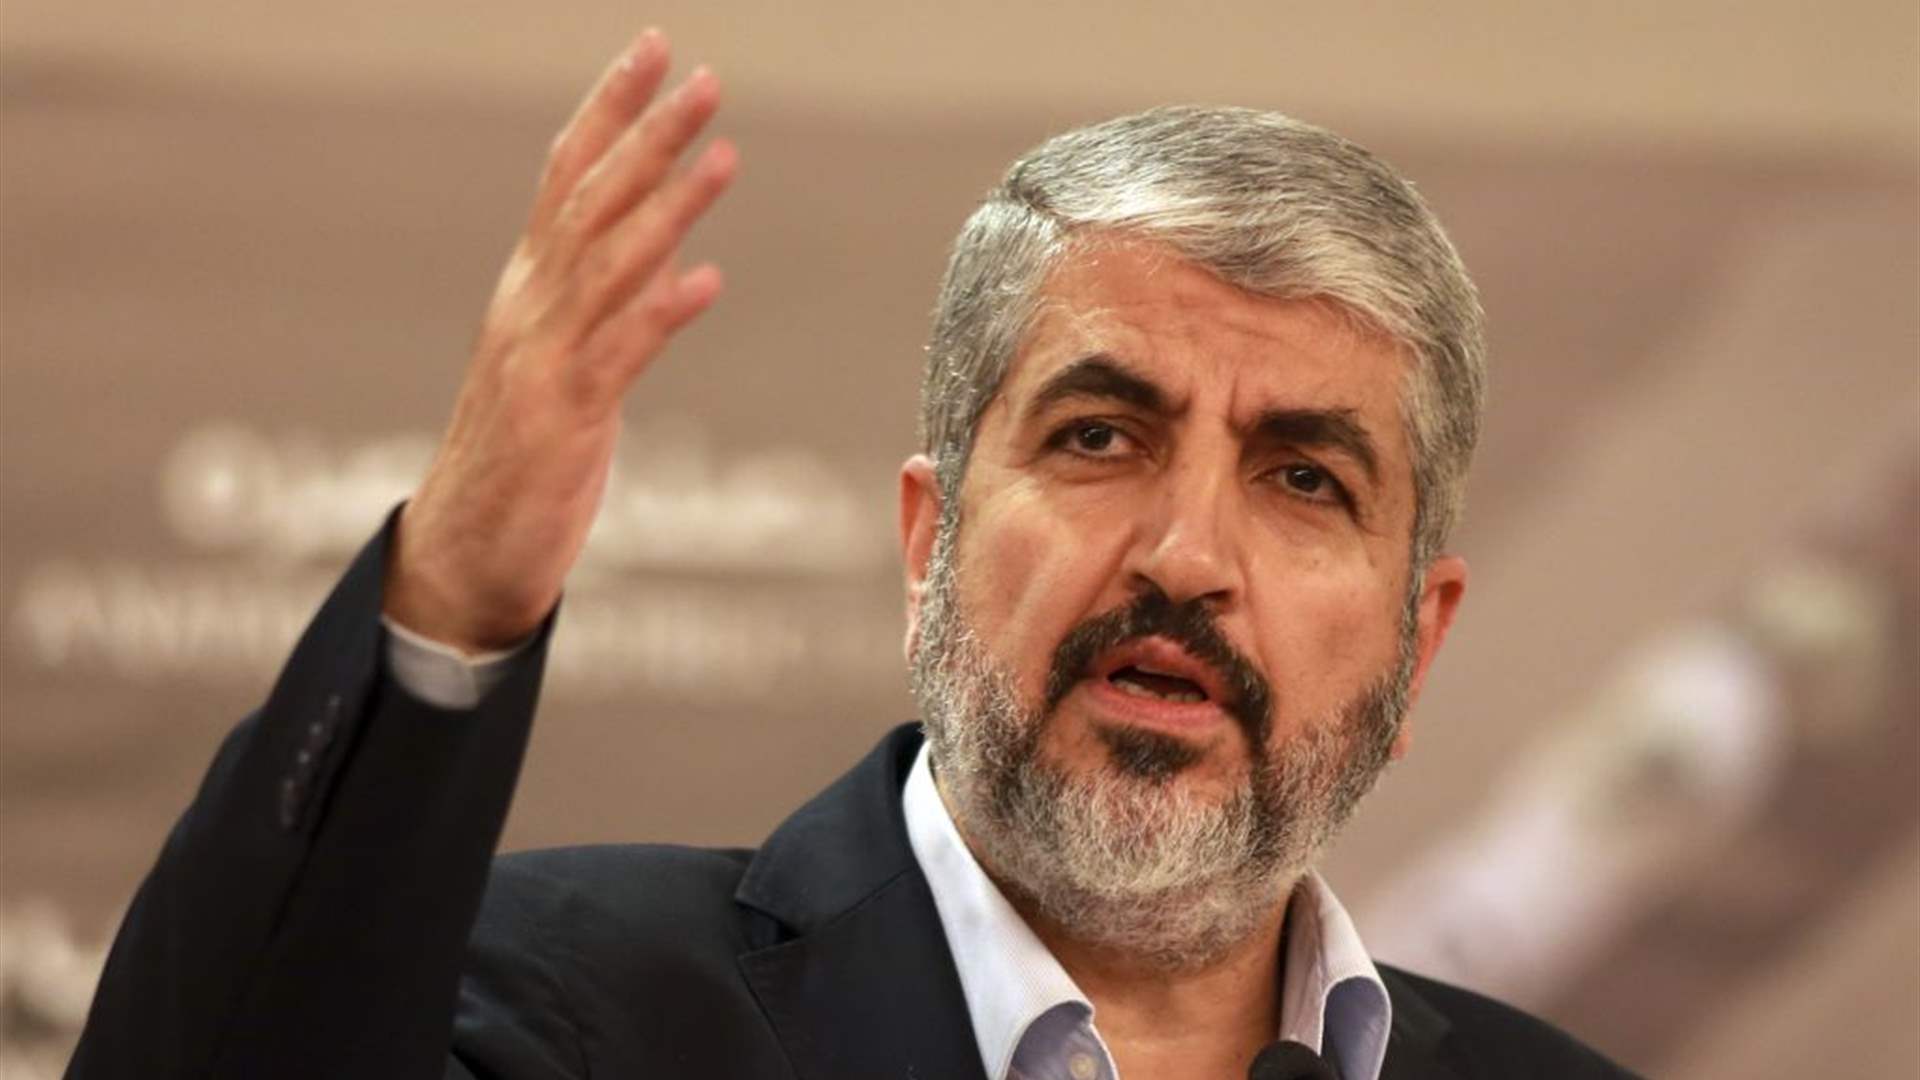 Hamas’ Khaled Meshaal to Al Arabiya: We will exchange Israeli prisoners for all our prisoners